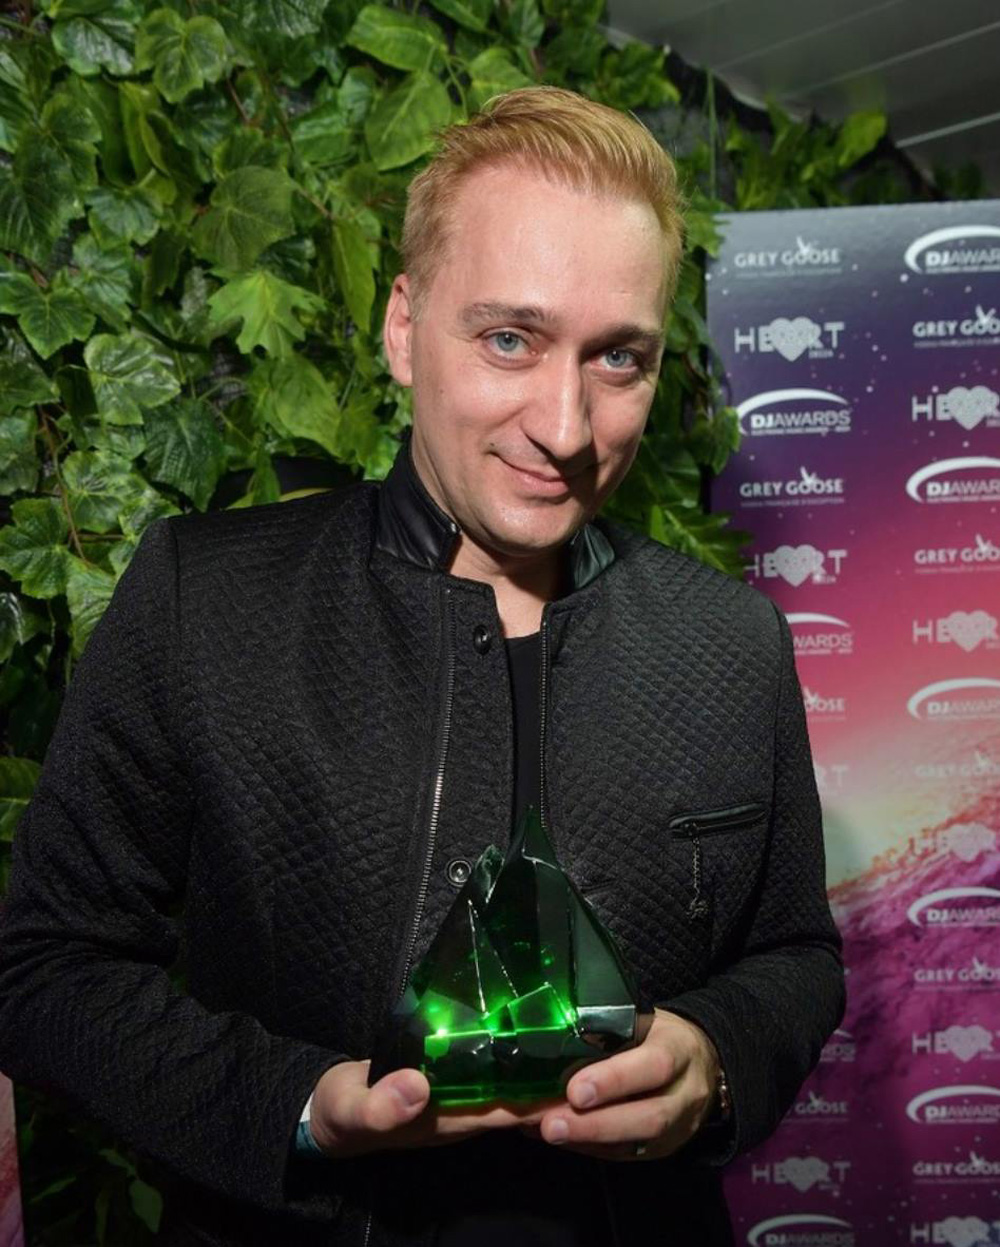 Paul van Dyk Trance Master at DJ Awards Ibiza